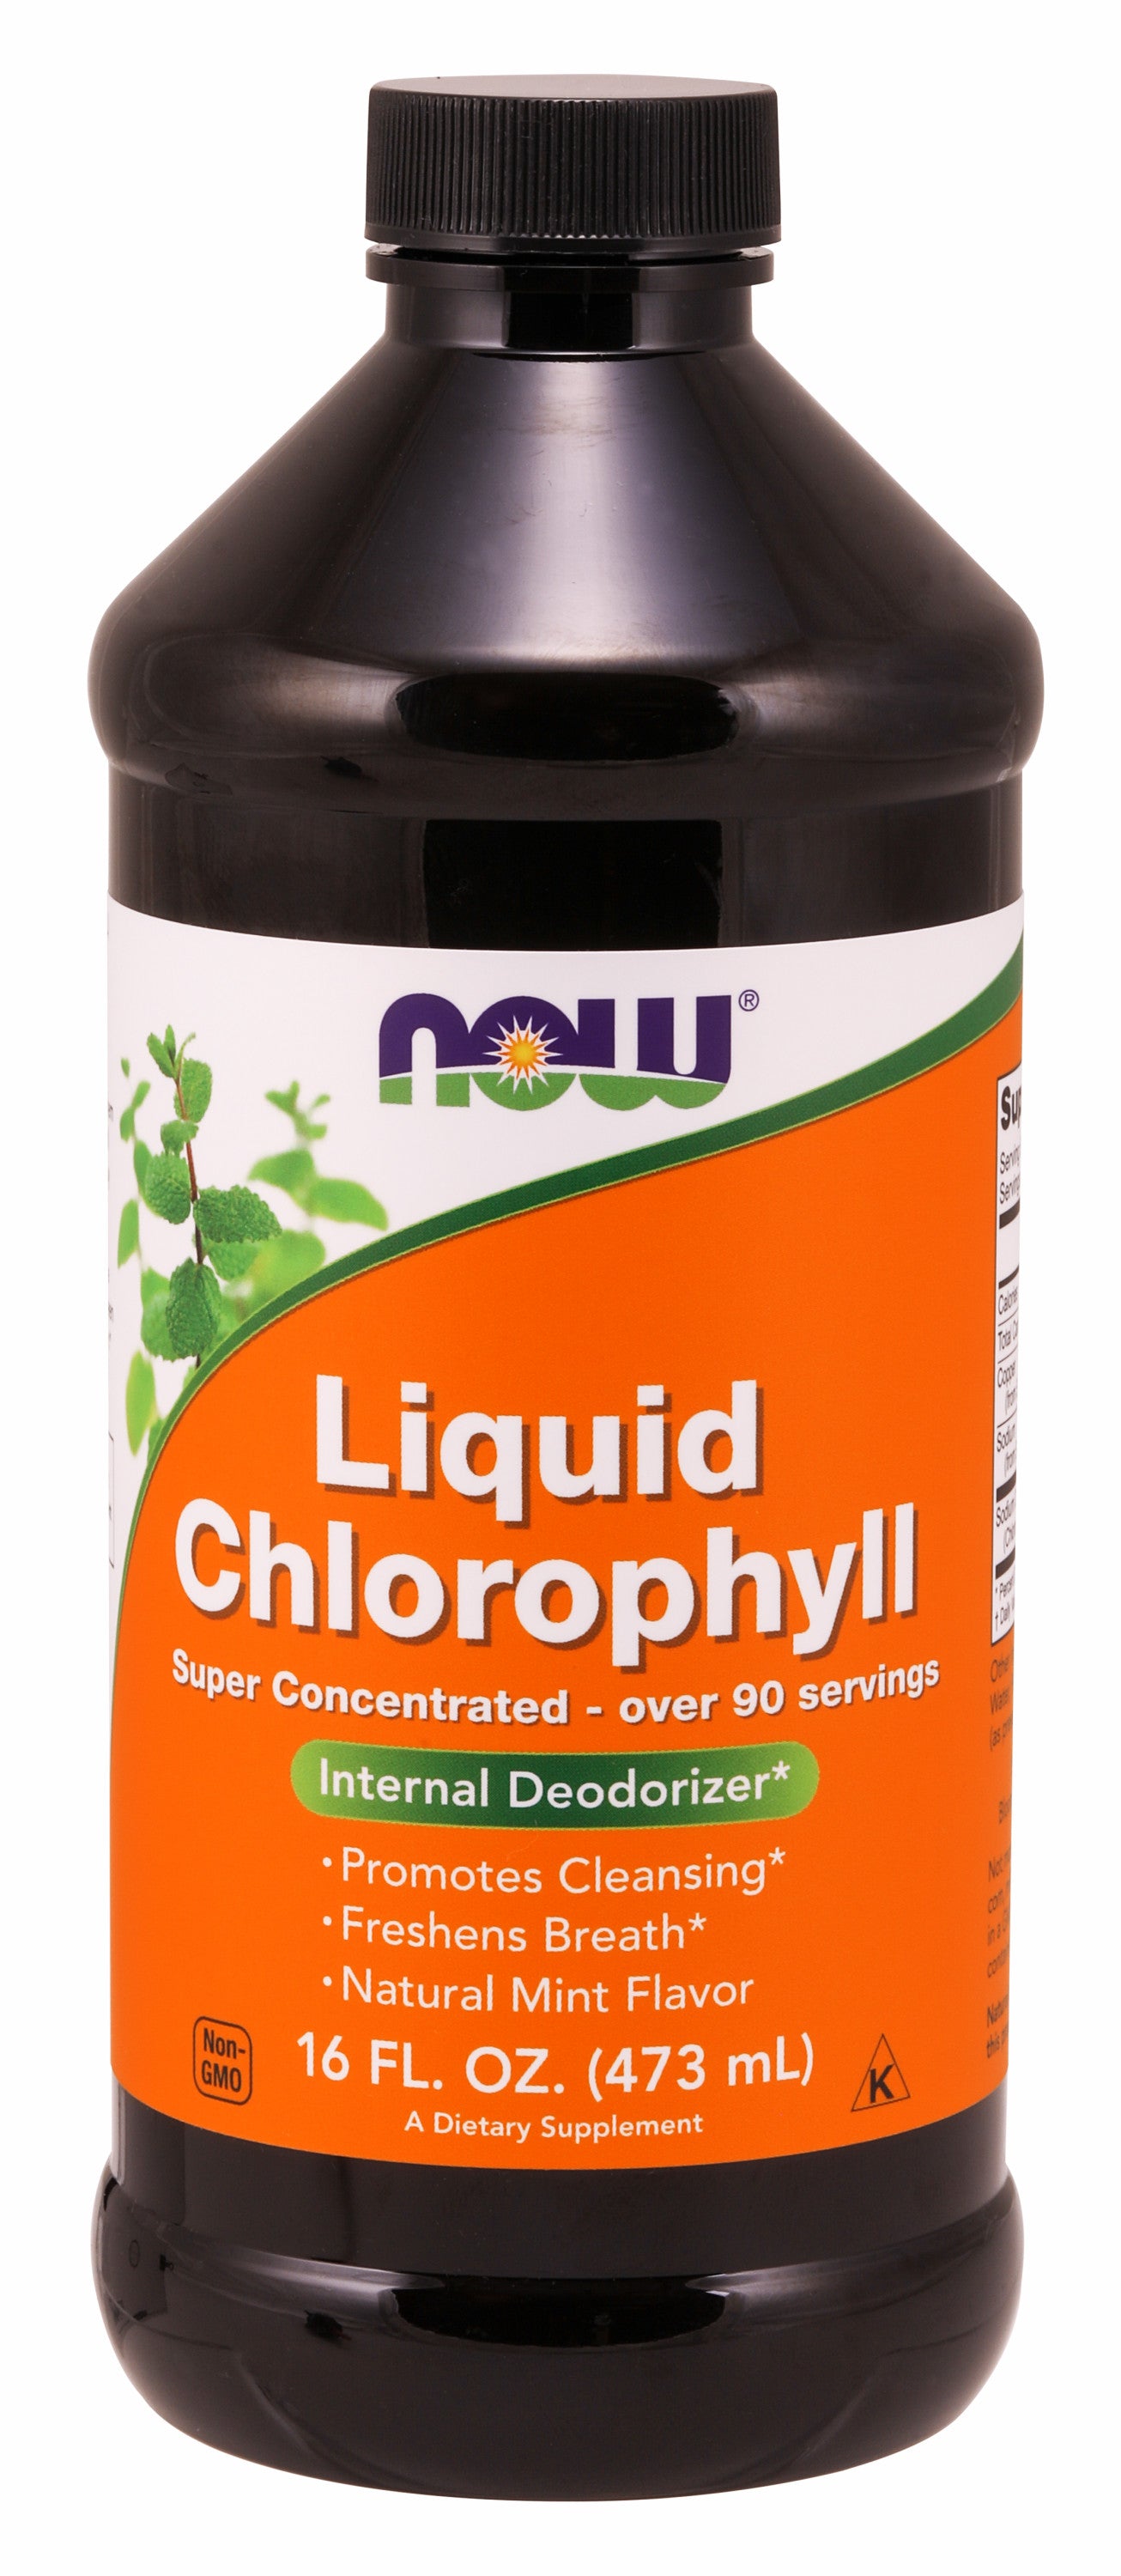 liquid chlorophyll benefits pregnancy